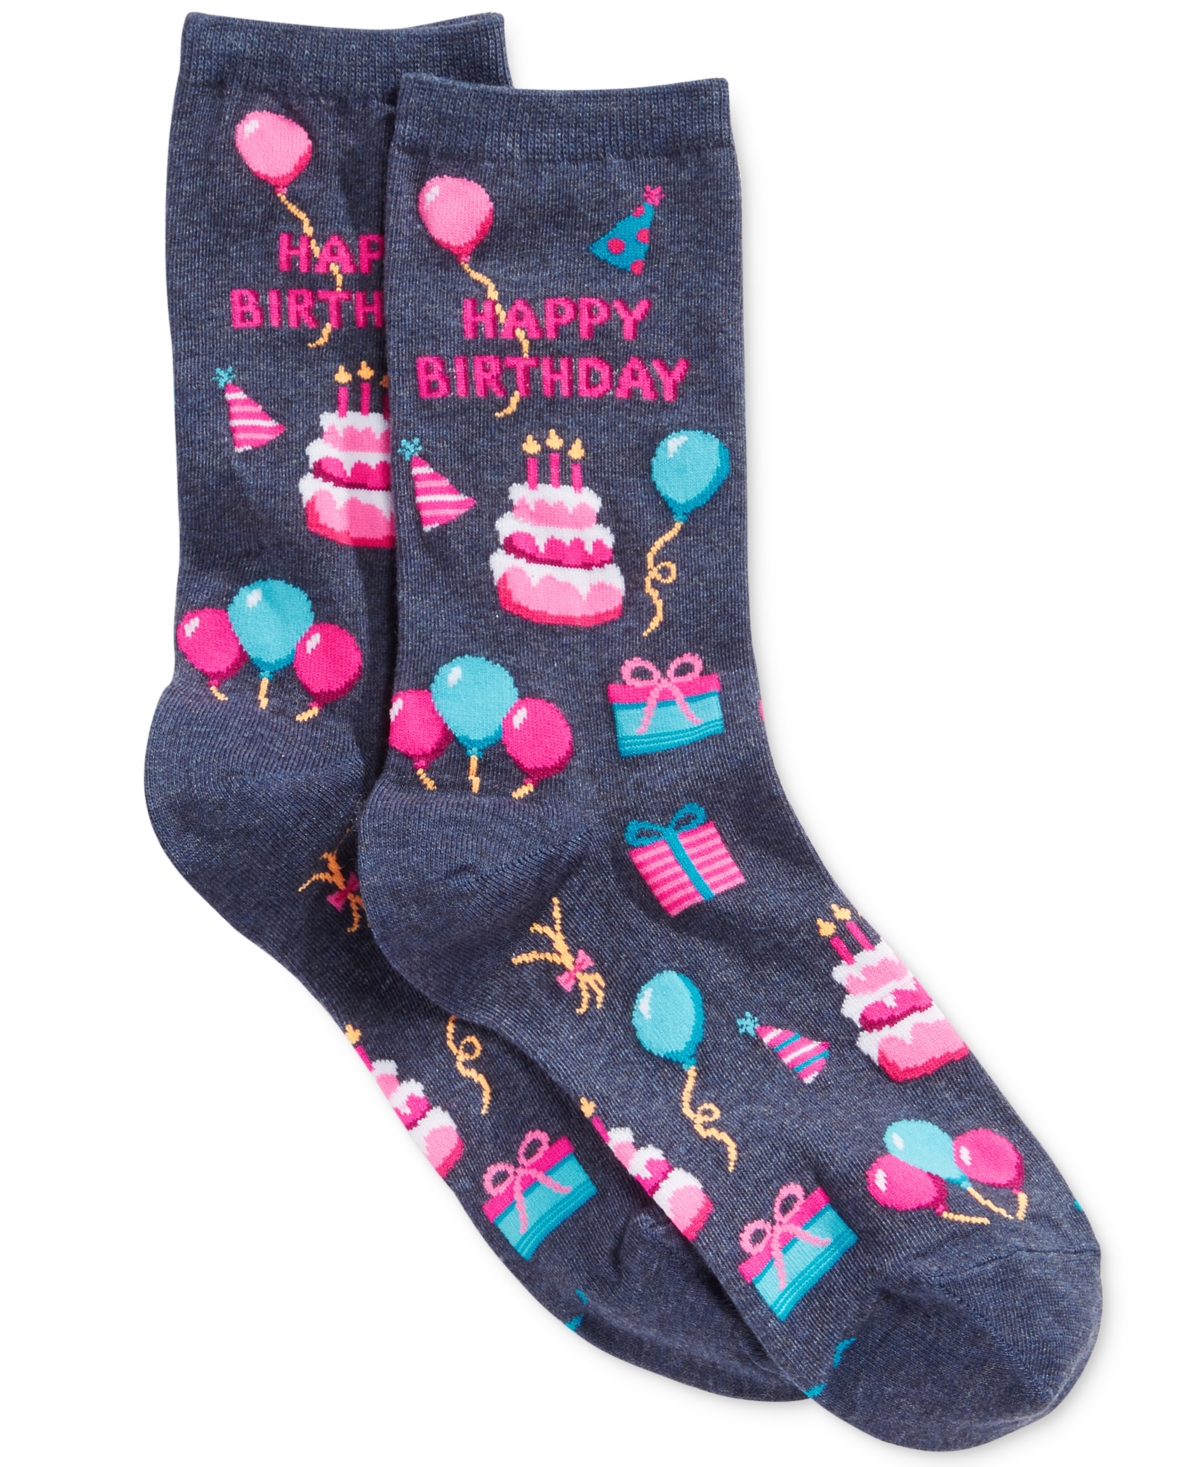 Hot Sox Women's Happy Birthday Fashion Crew Socks